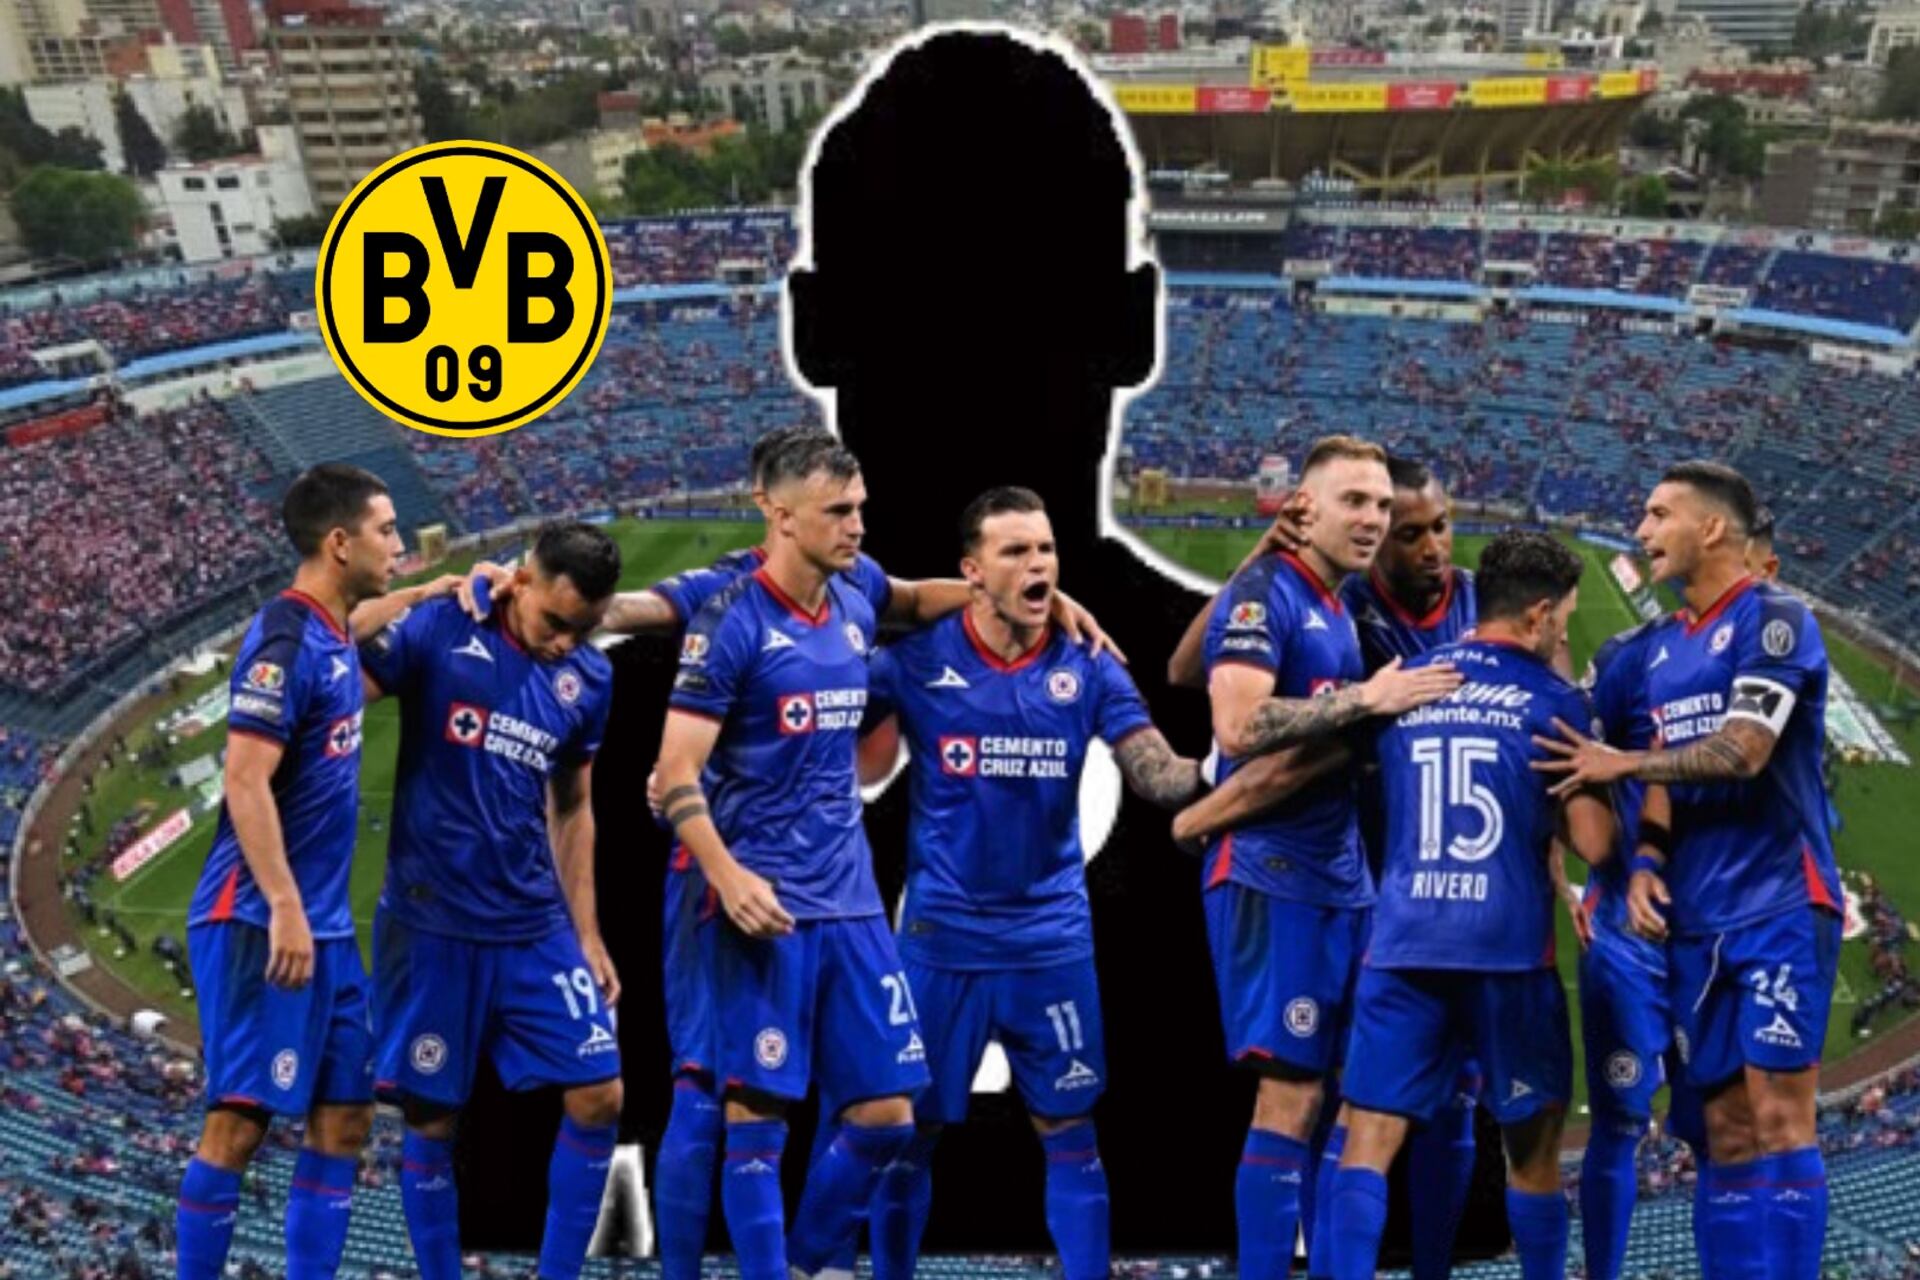 De poder llegar al Borussia Dortmund en lugar de Haller, a ser buscado por Cruz Azul